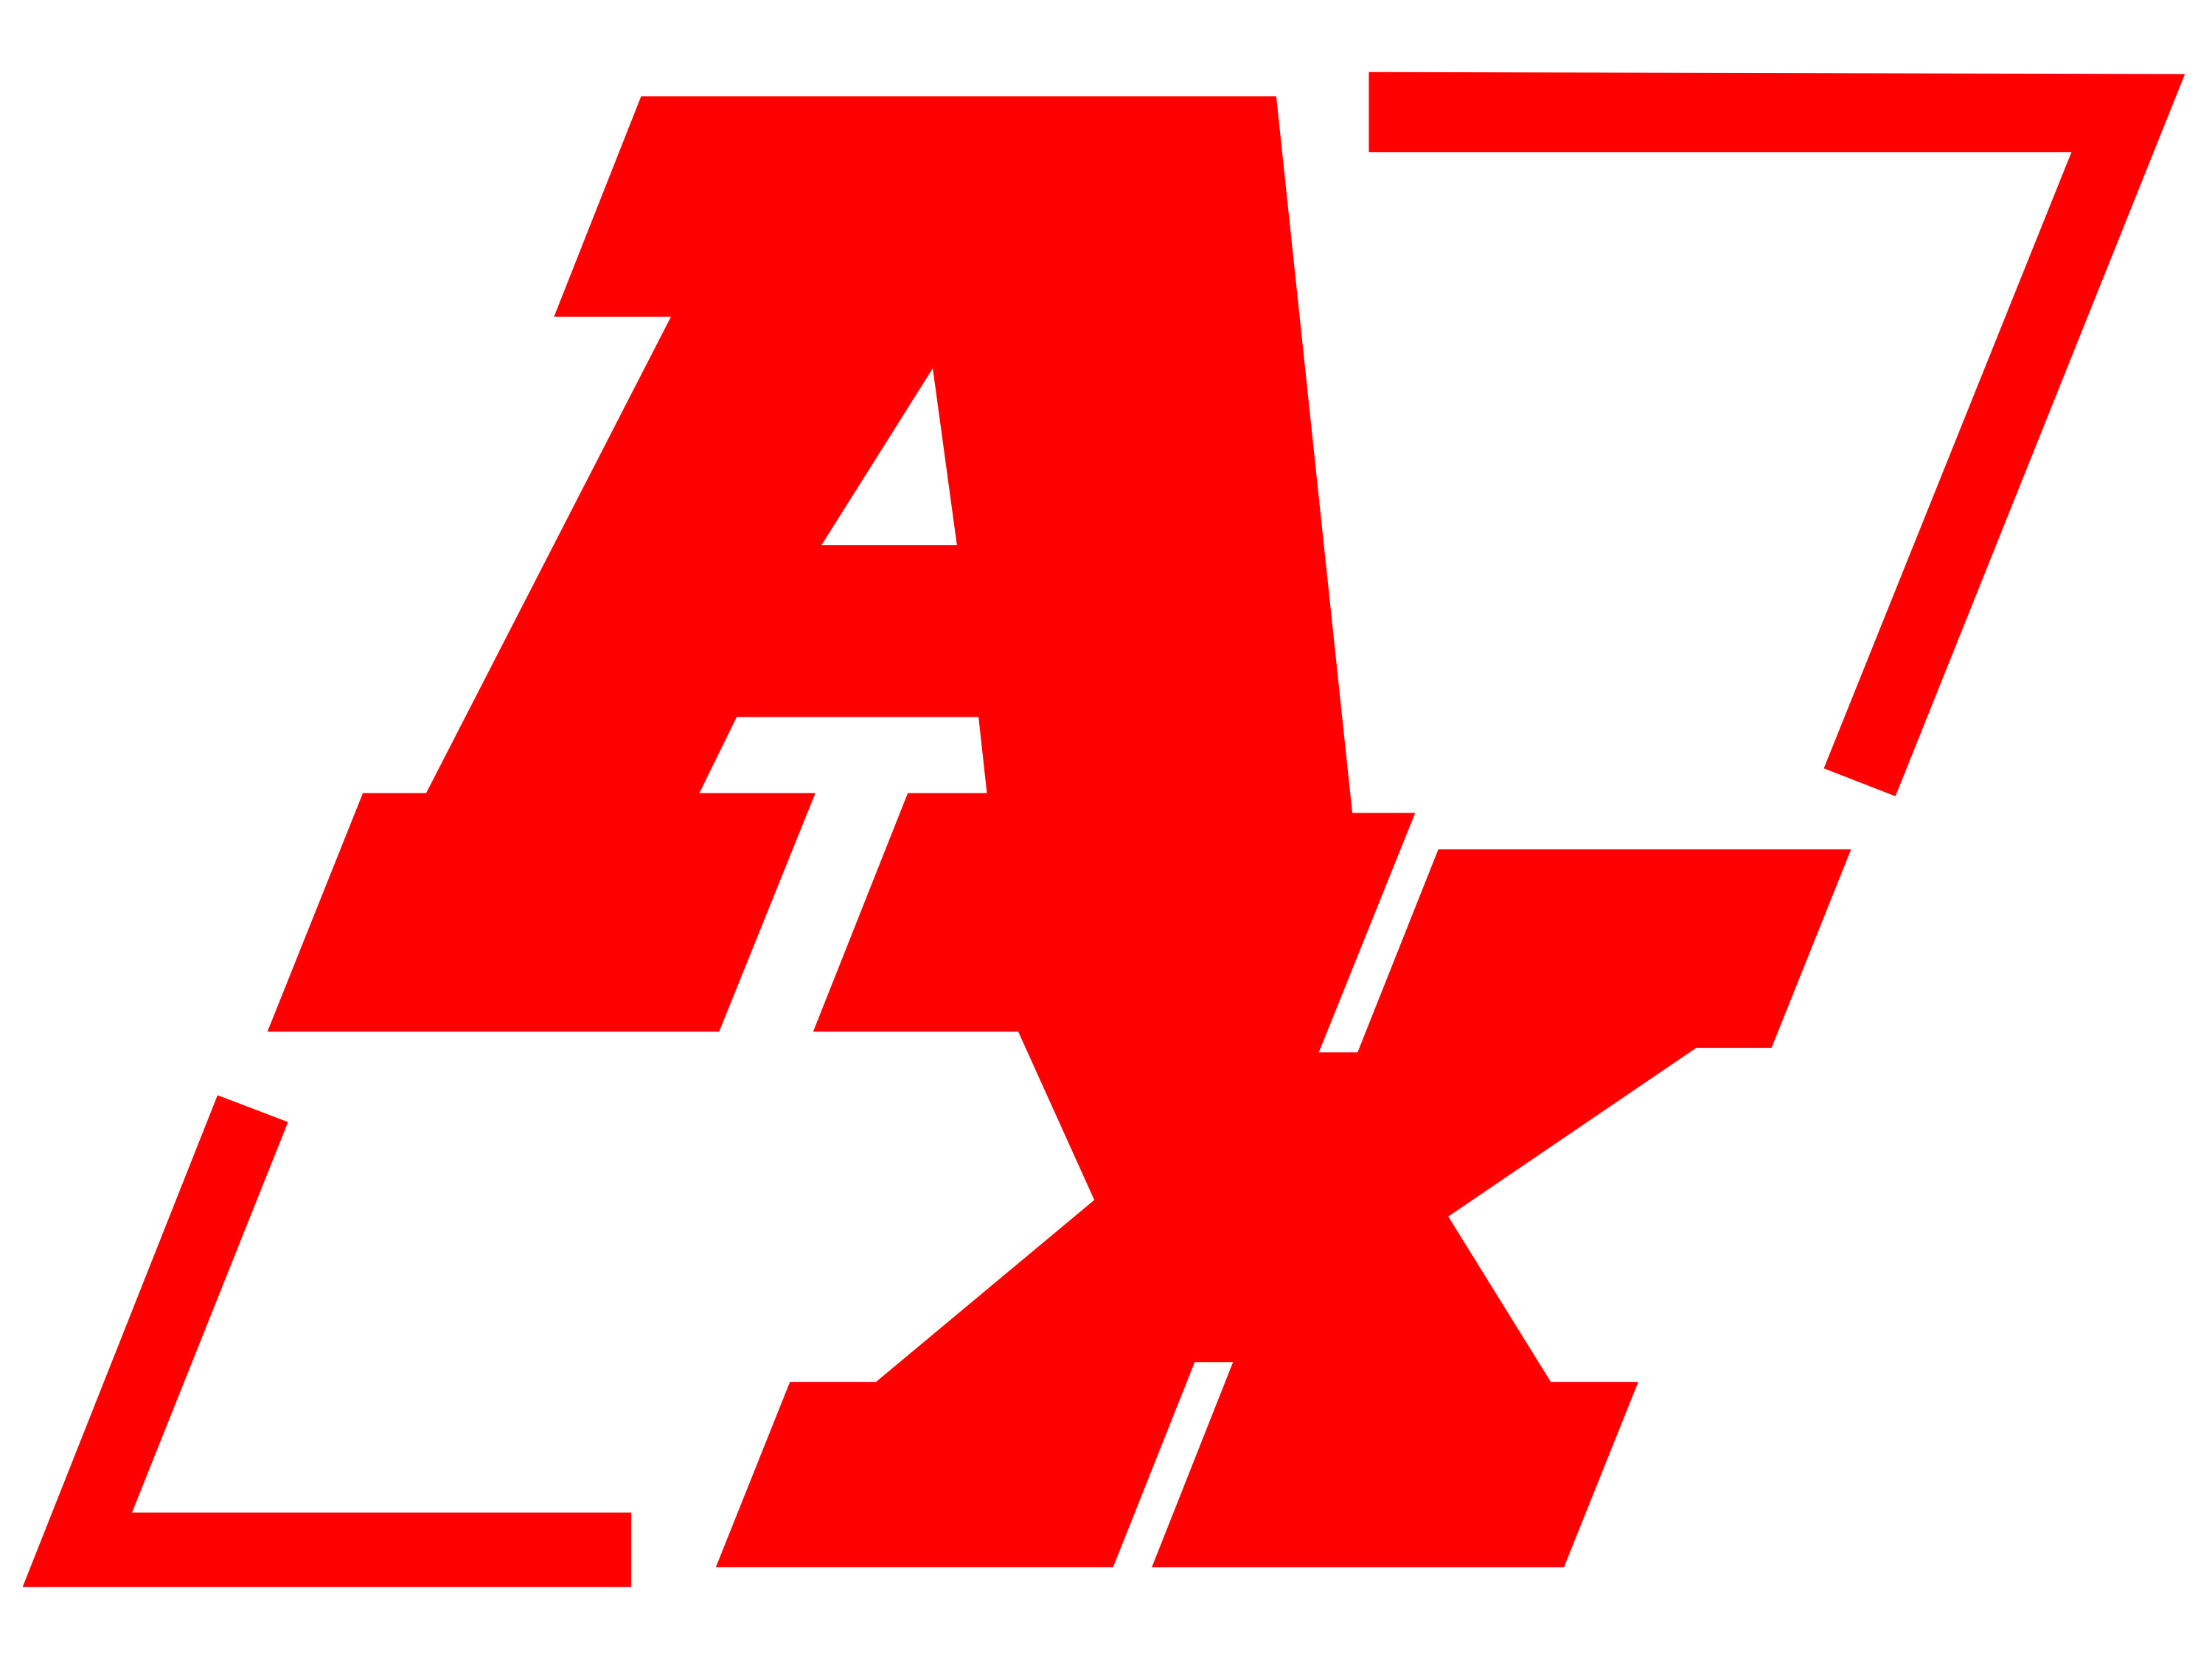 AX Distribution